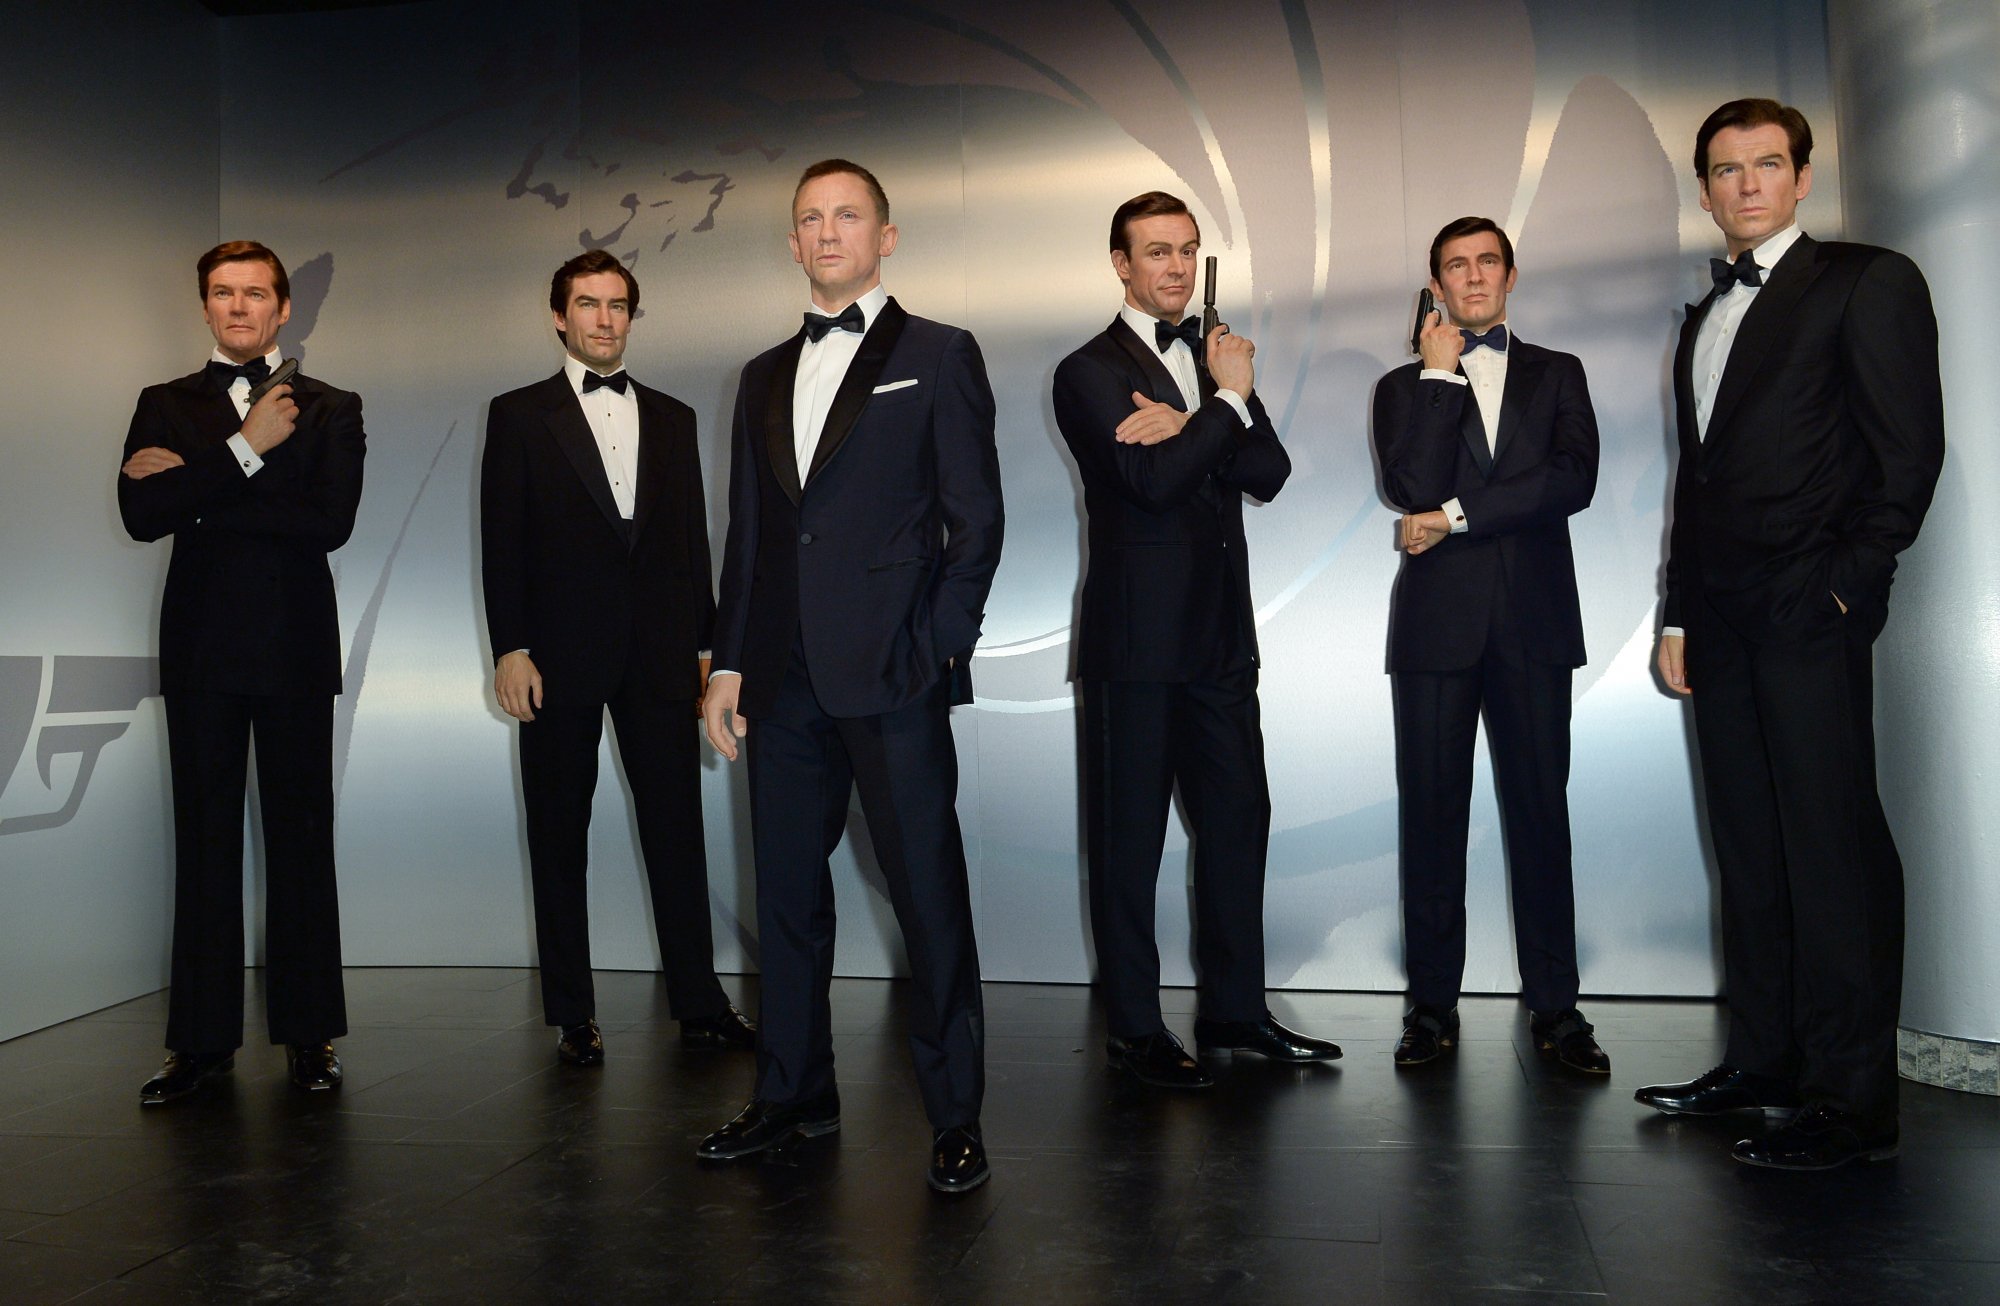 James Bond Madame Tussaud exhibit featuring Roger Moore, Timothy Dalton, Daniel Craig, Sean Connery, George Lazenby and Pierce Brosnan wax figures